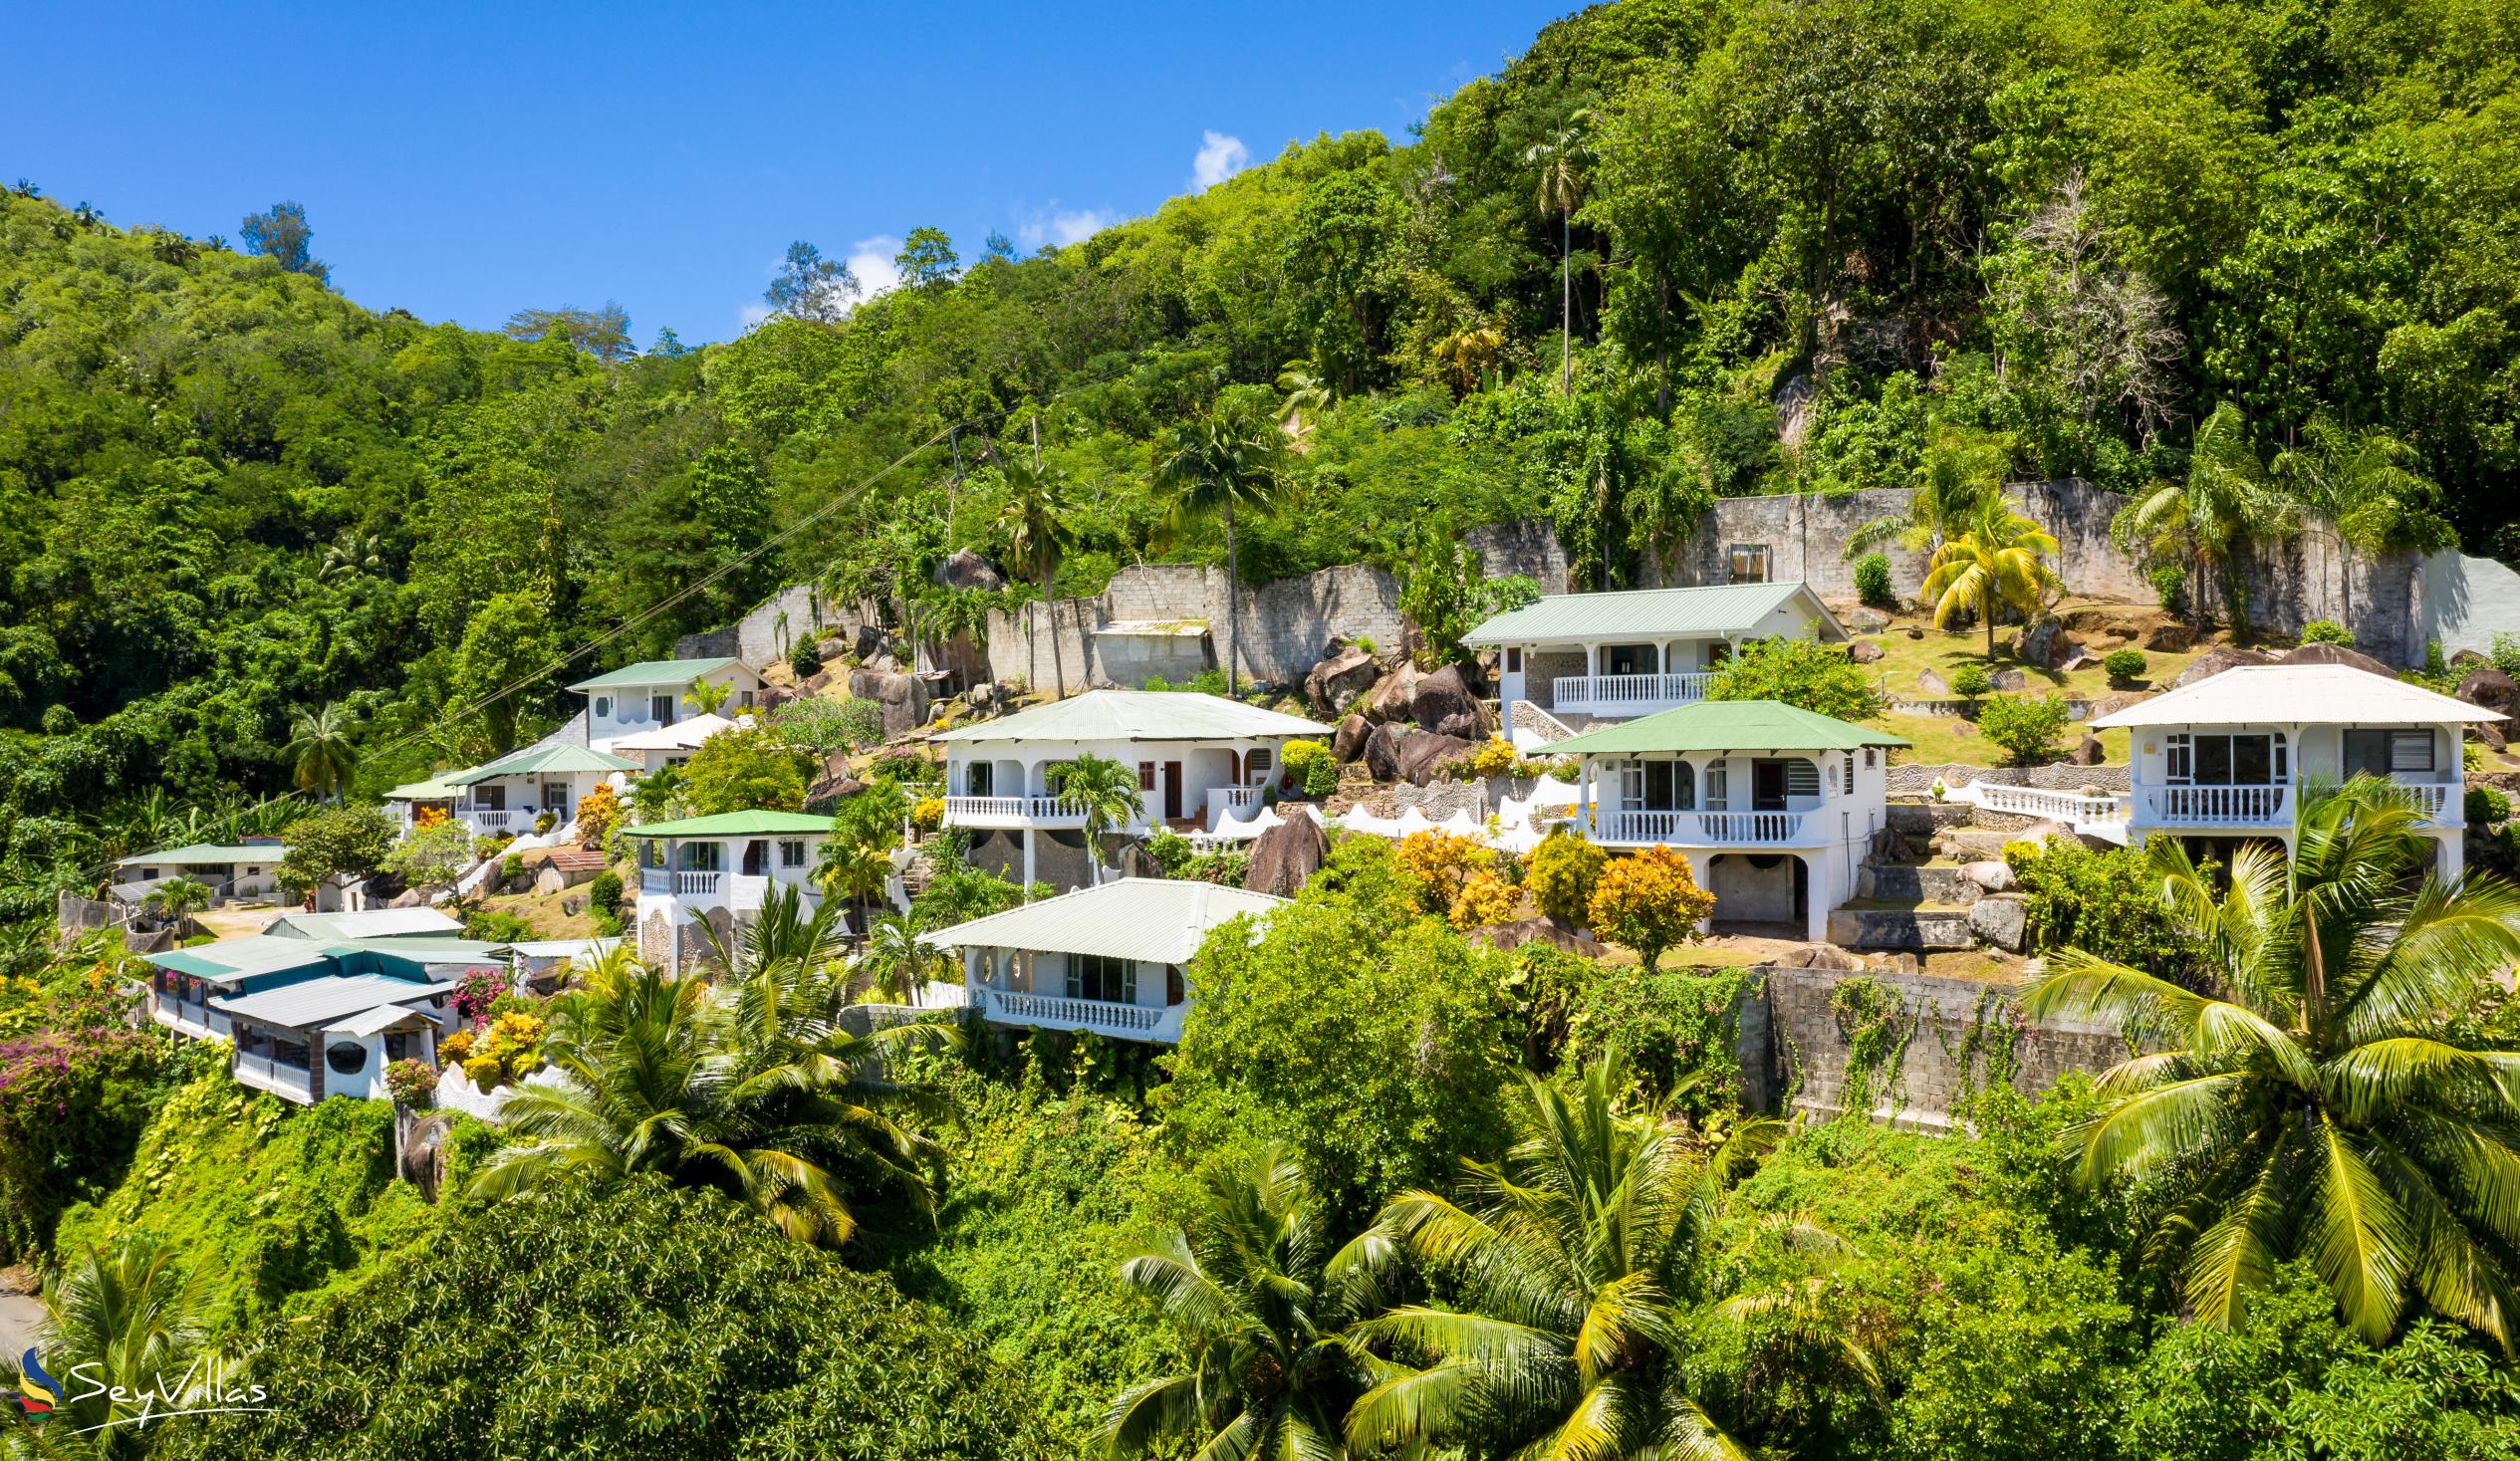 Photo 1: Lazare Picault Hotel - Outdoor area - Mahé (Seychelles)